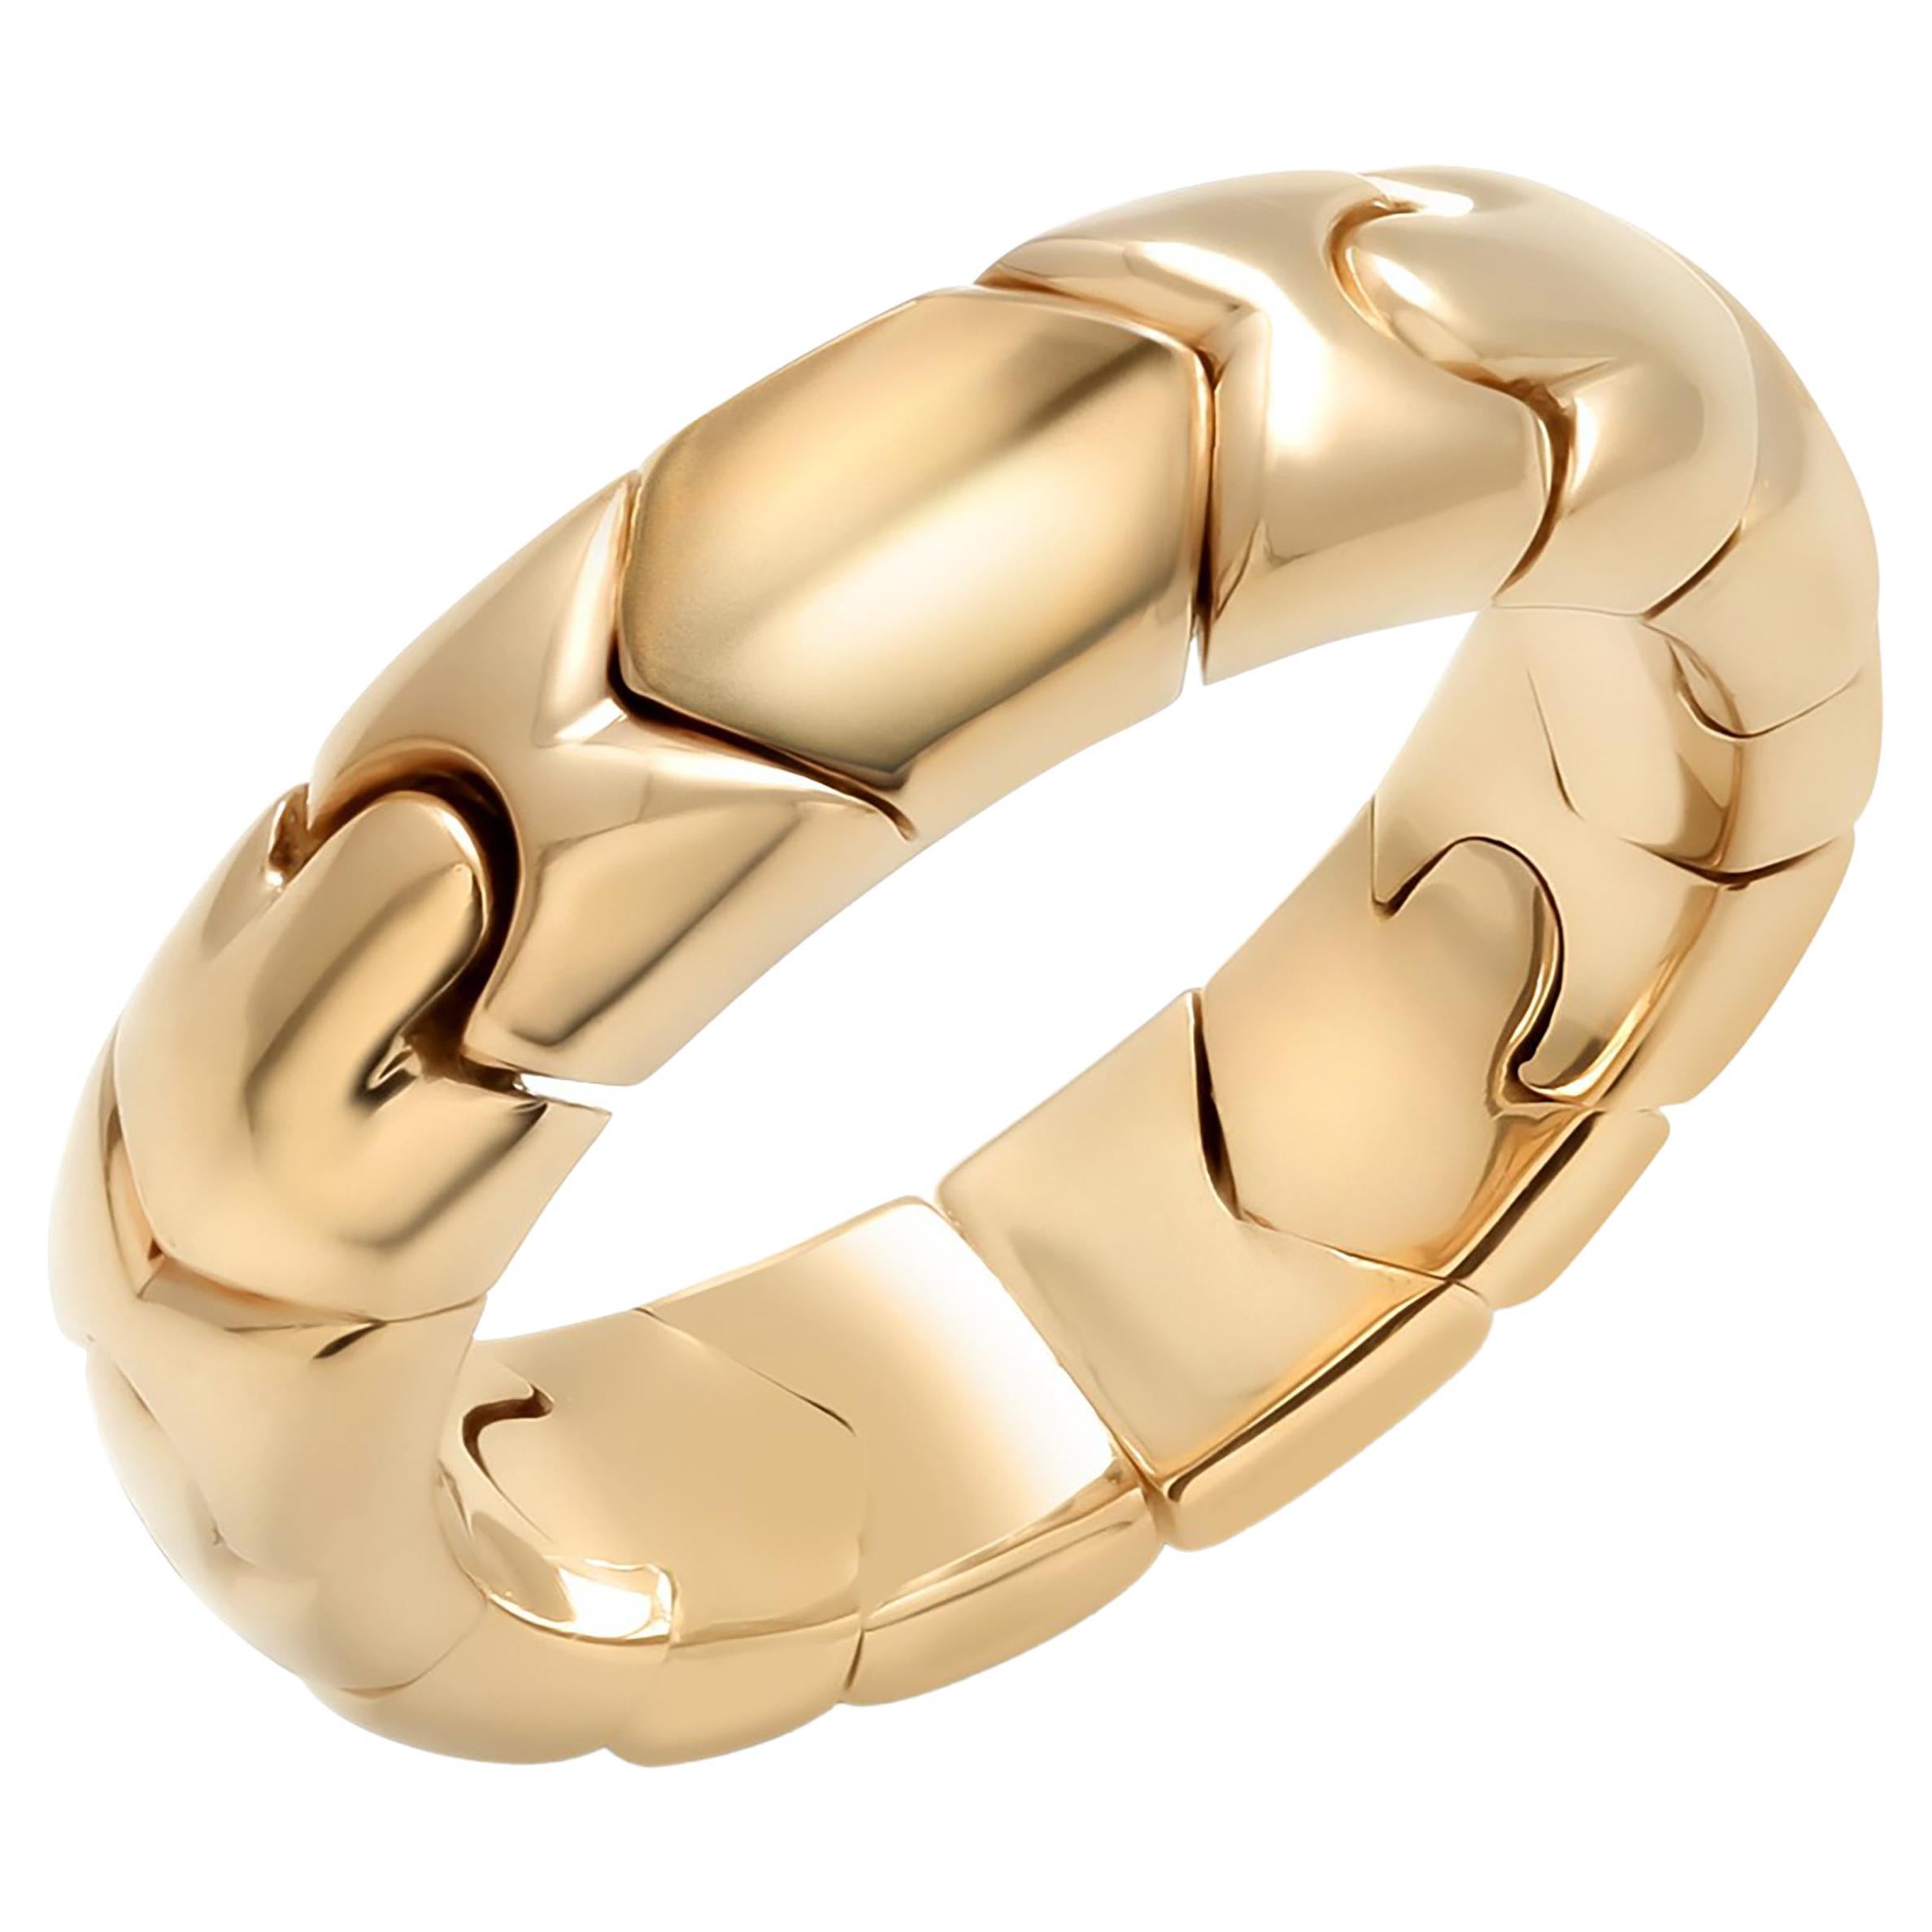 Bvlgari Passo Doppio Collection 18 Karat Gold Band Ring Finger Size 9 For Sale